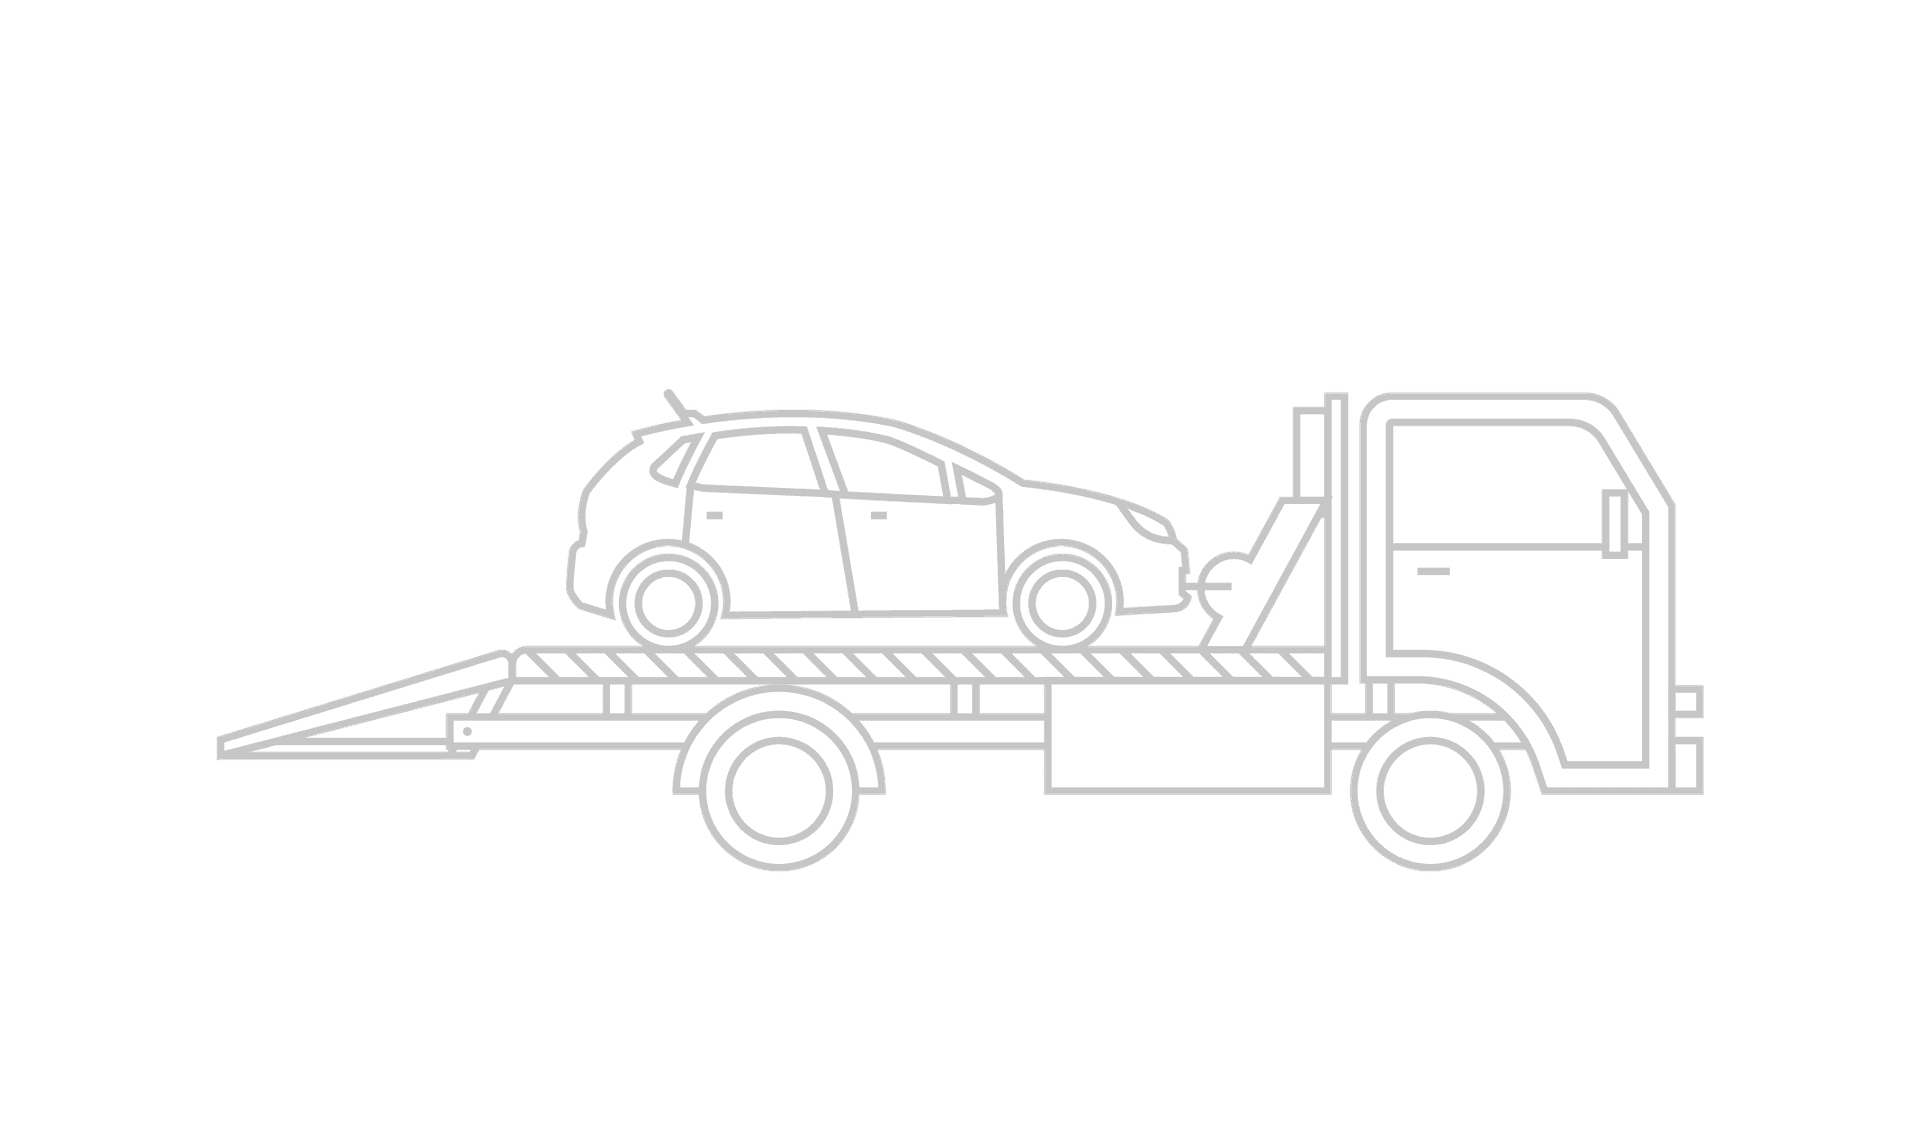 Vehicles service